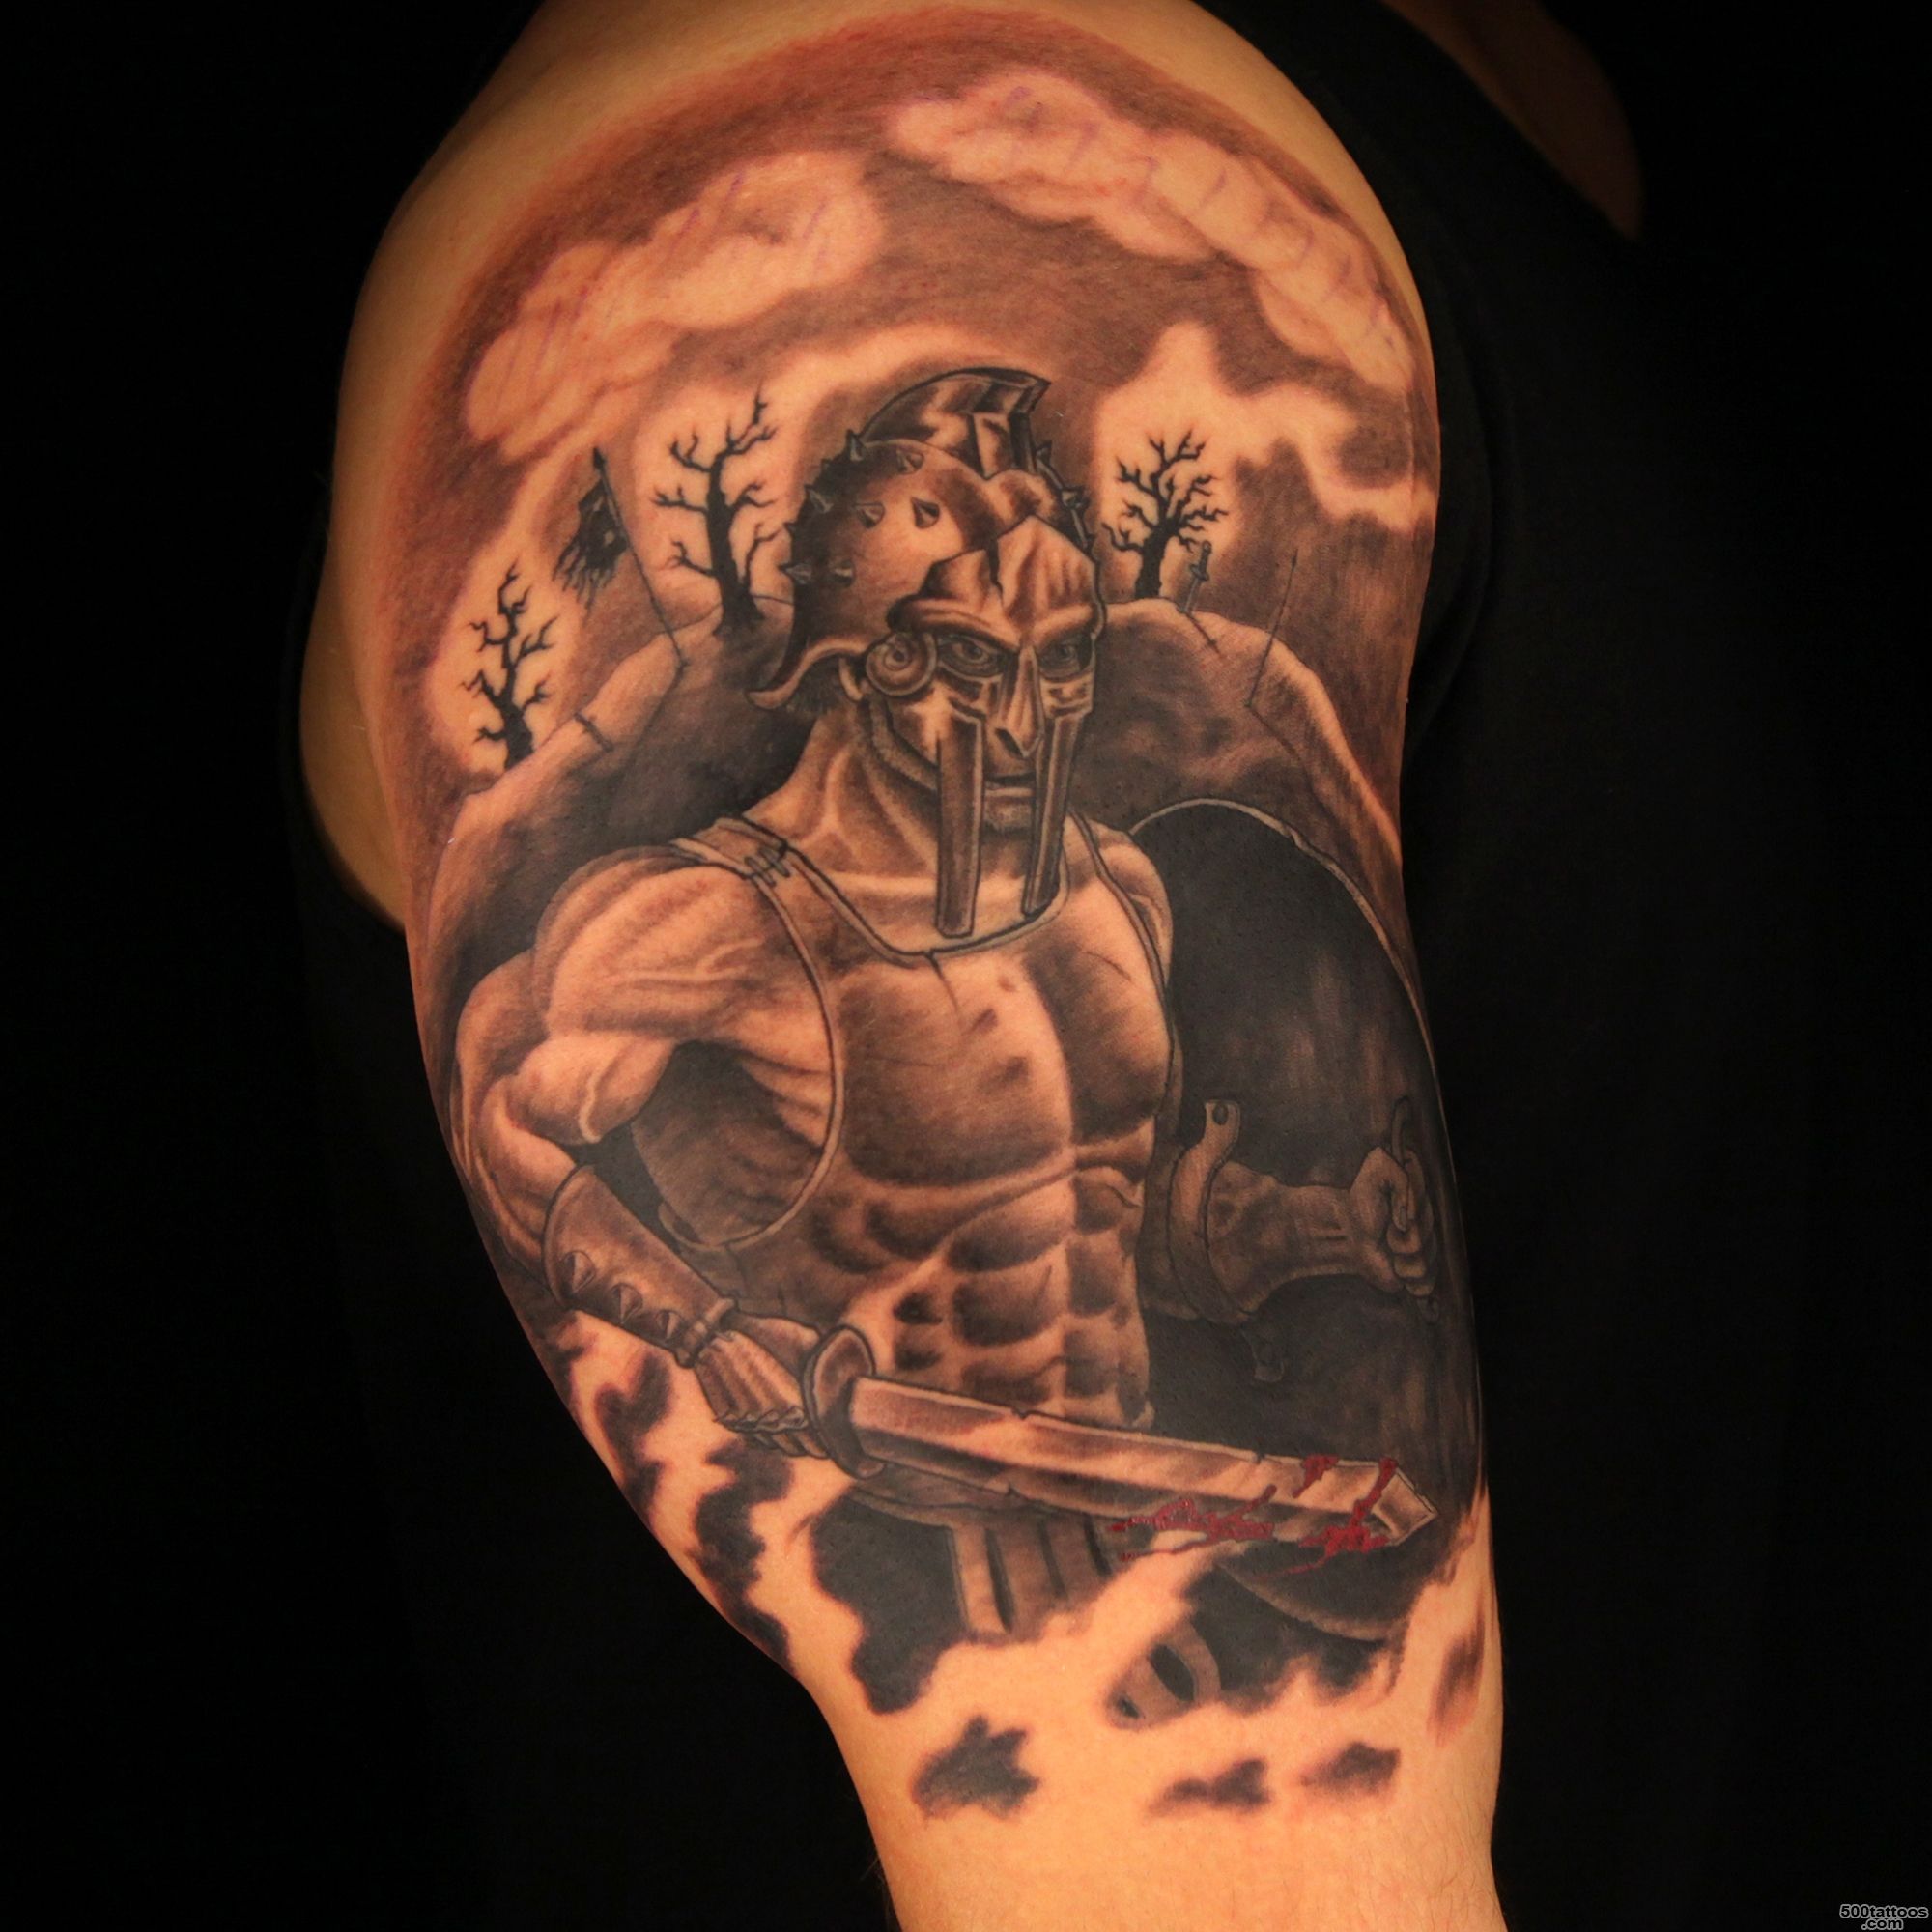 Gladiator and tiger tattoo   TattooMagz   Handpicked World#39s ..._22